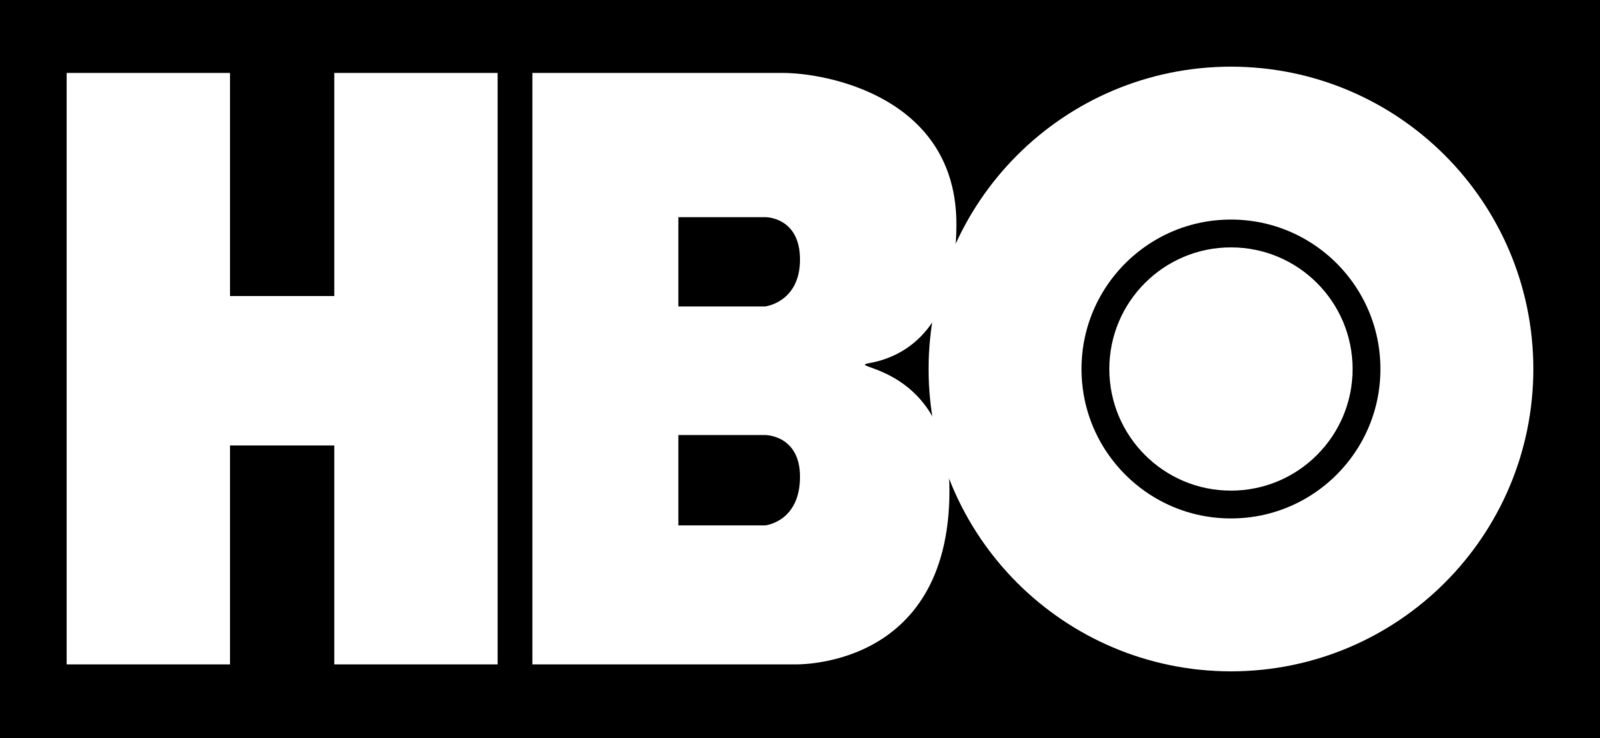 hbo-logo-black-and-white